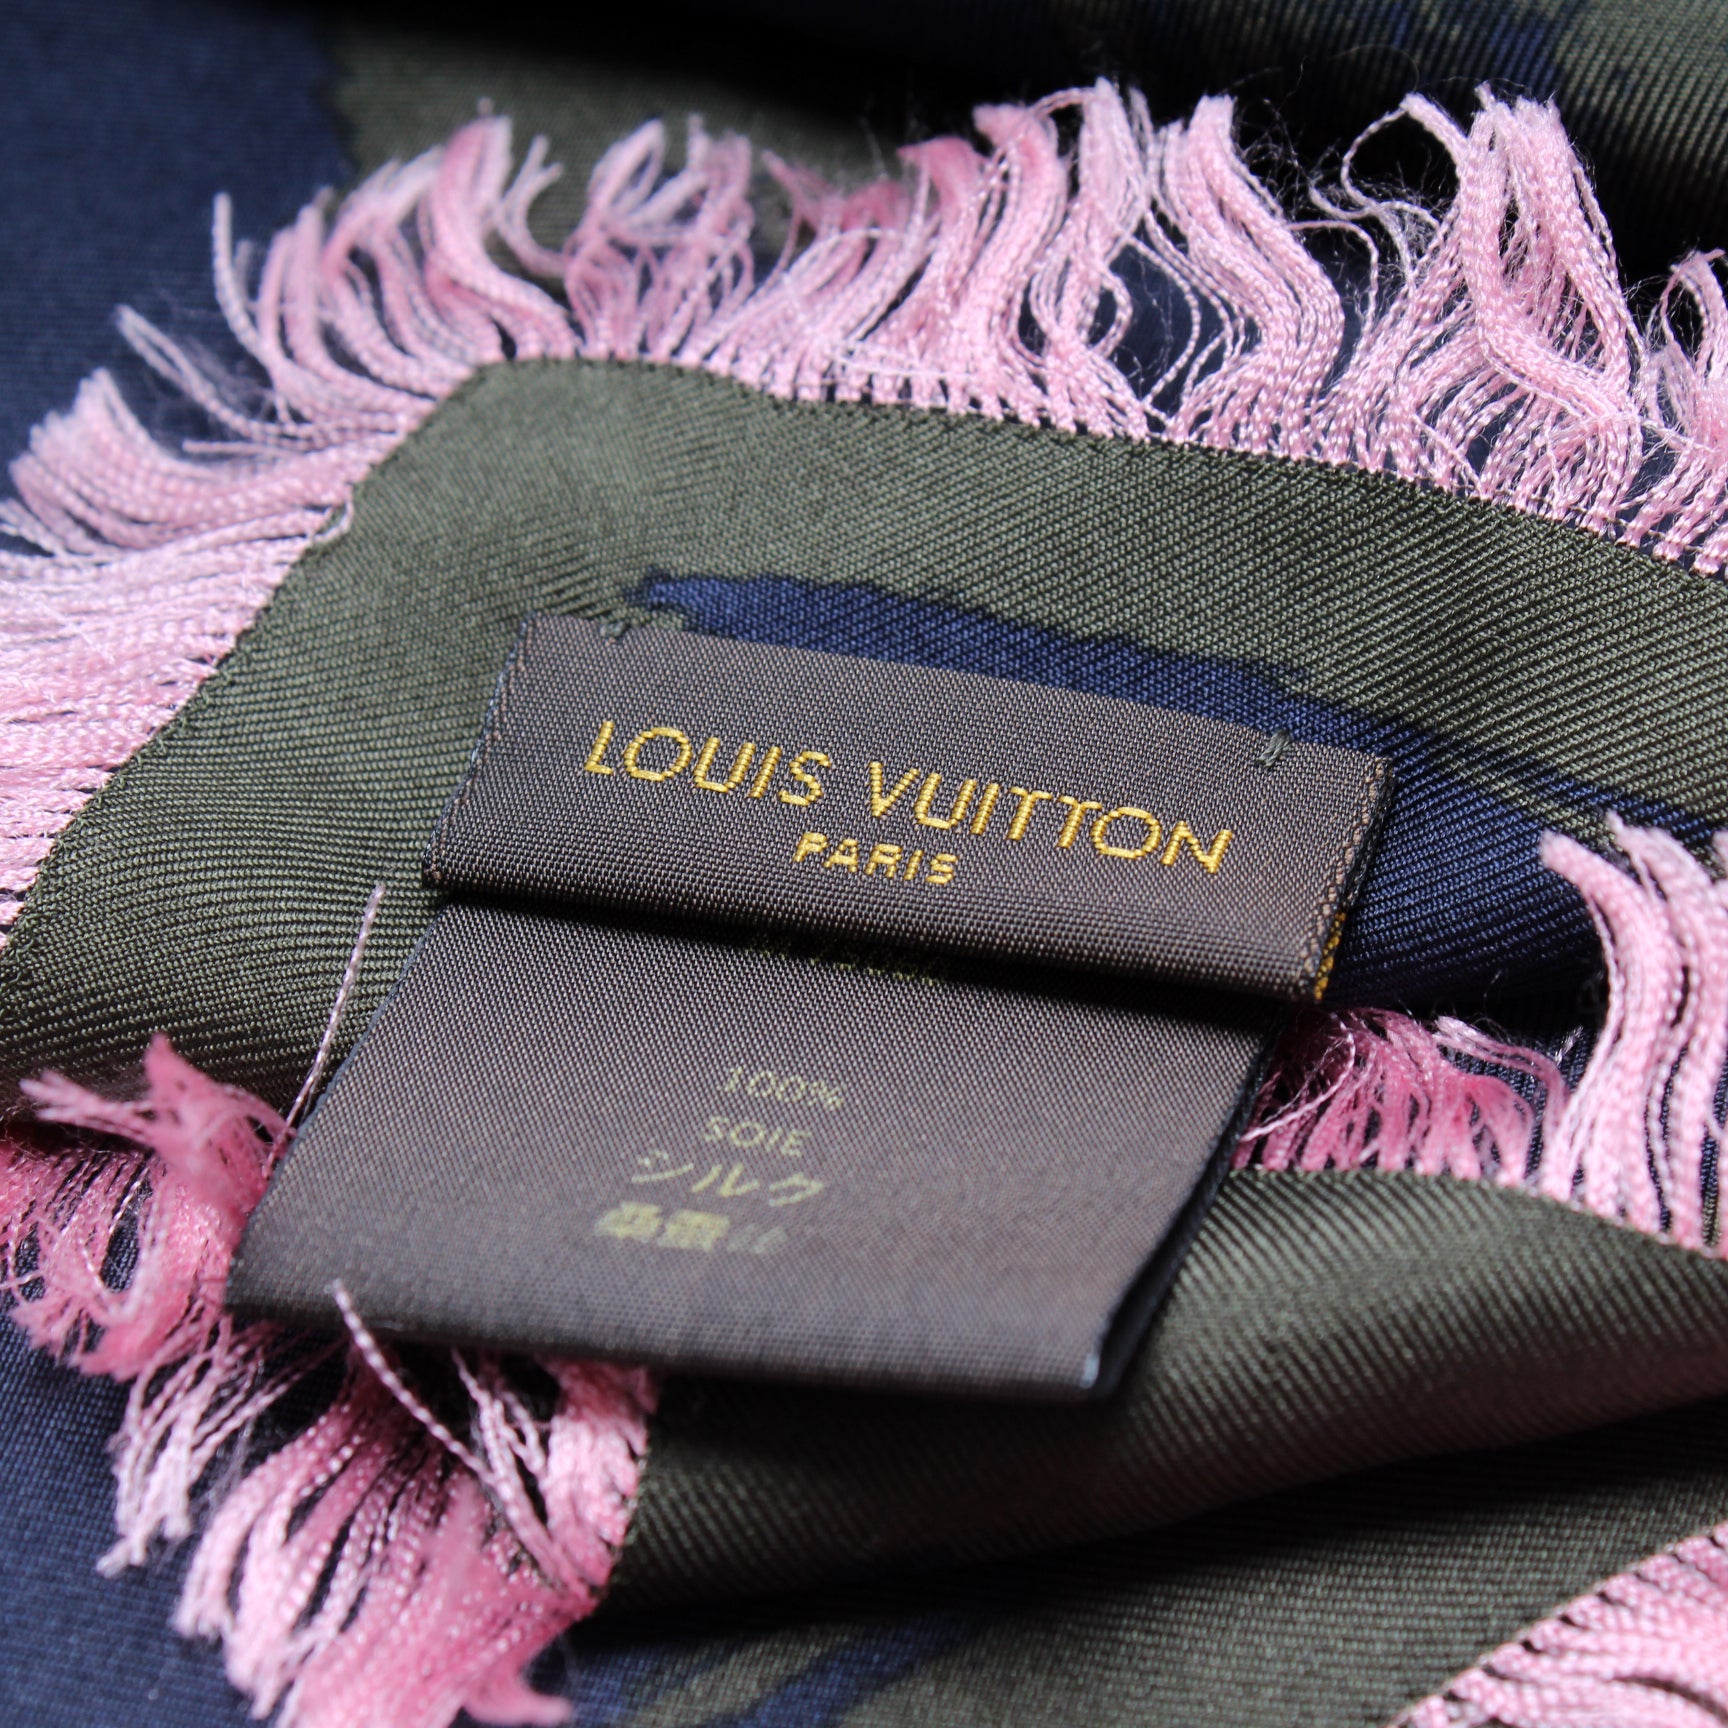 Louis Vuitton Scarf Flowers Rain - Designer WishBags